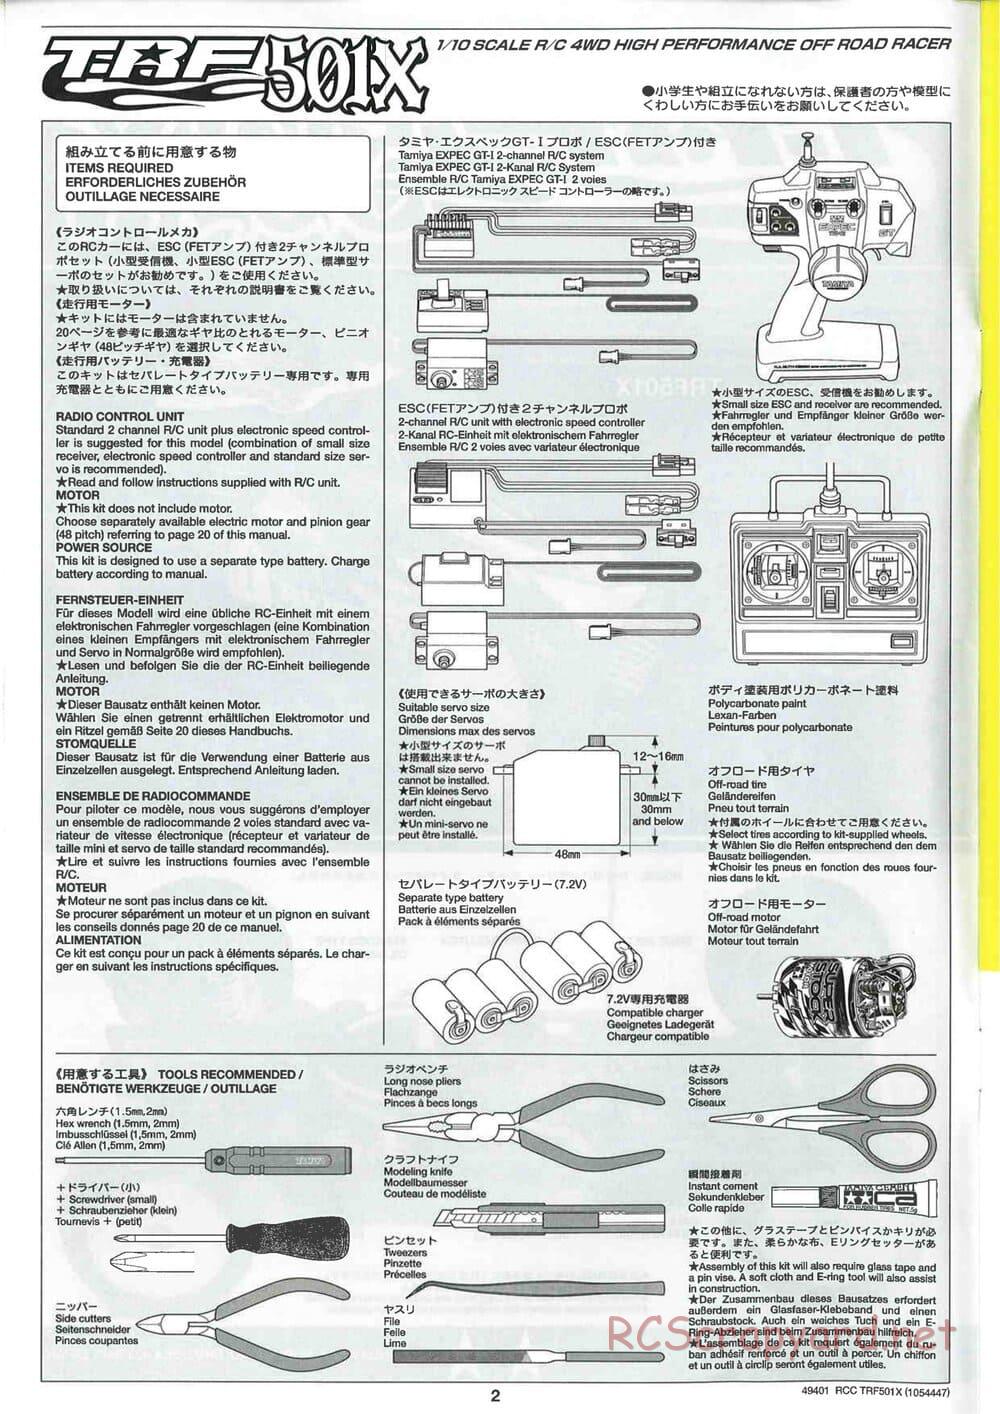 Tamiya - TRF501X Chassis - Manual - Page 2